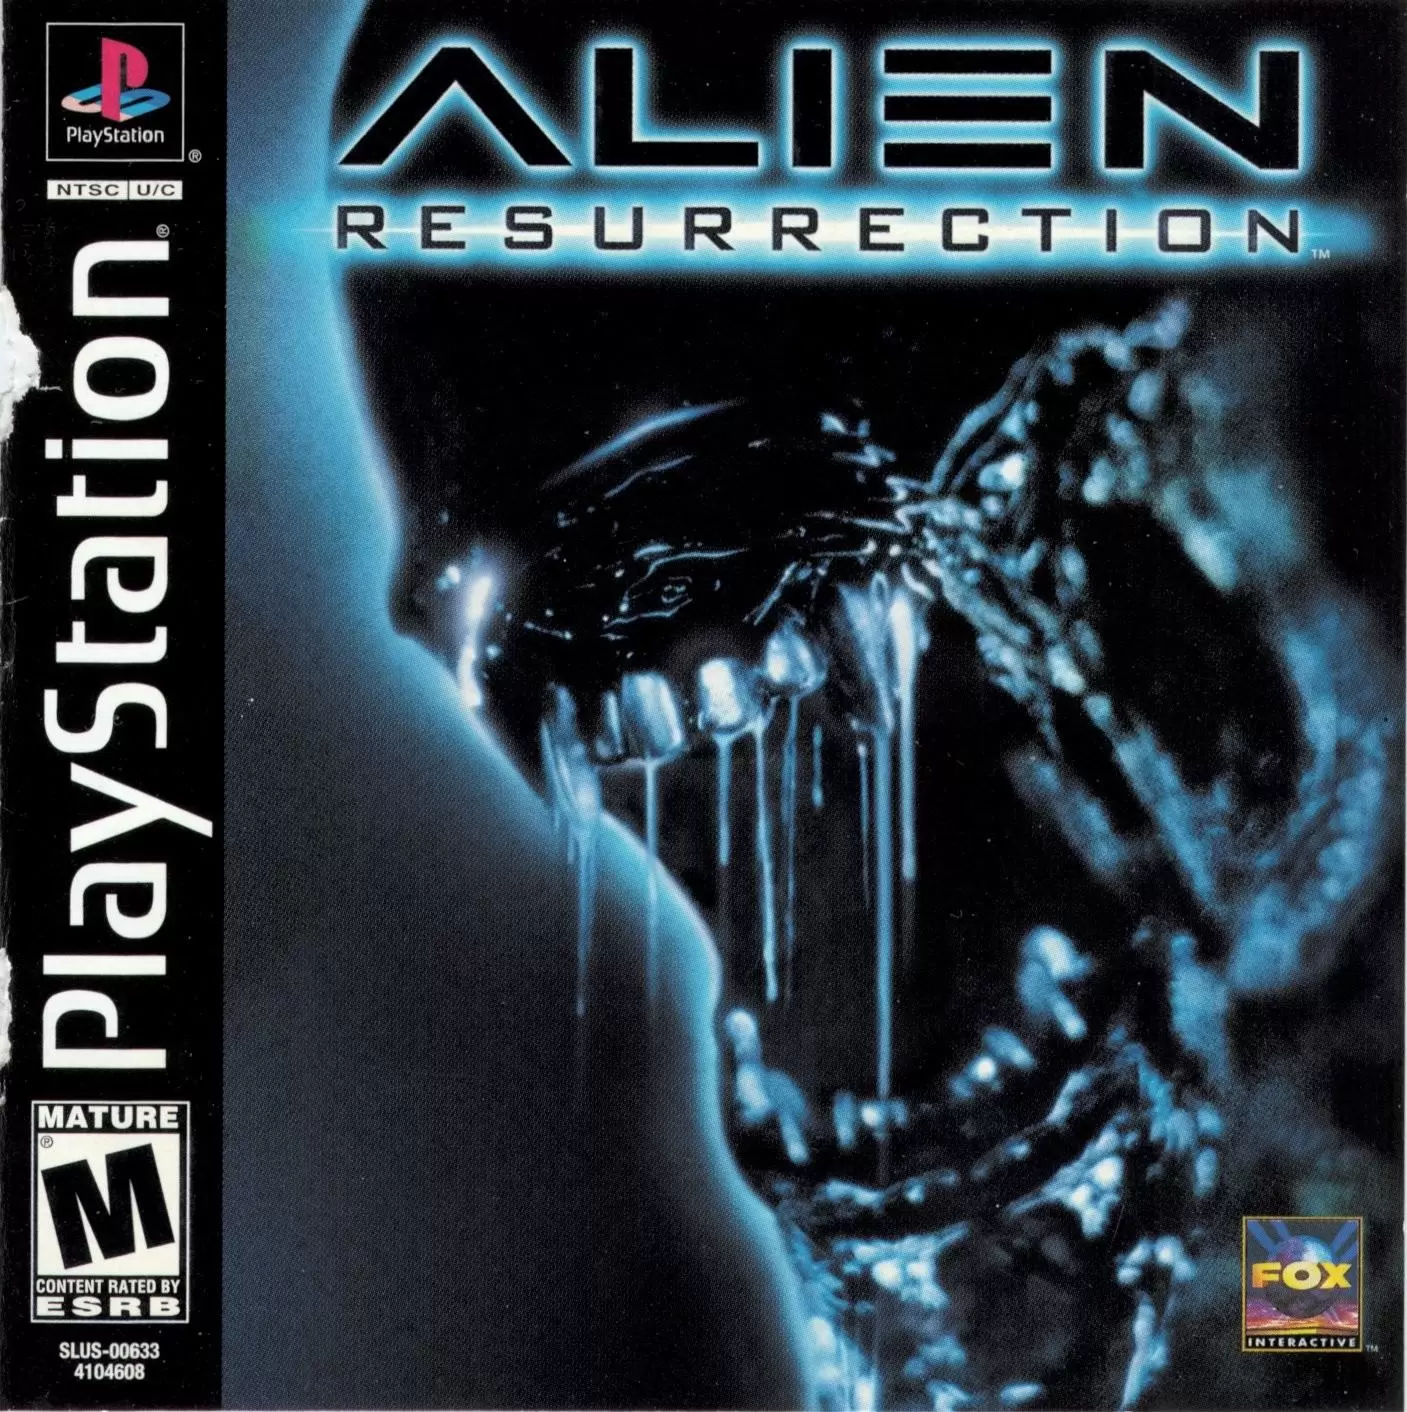 Playstation games - Alien Resurrection